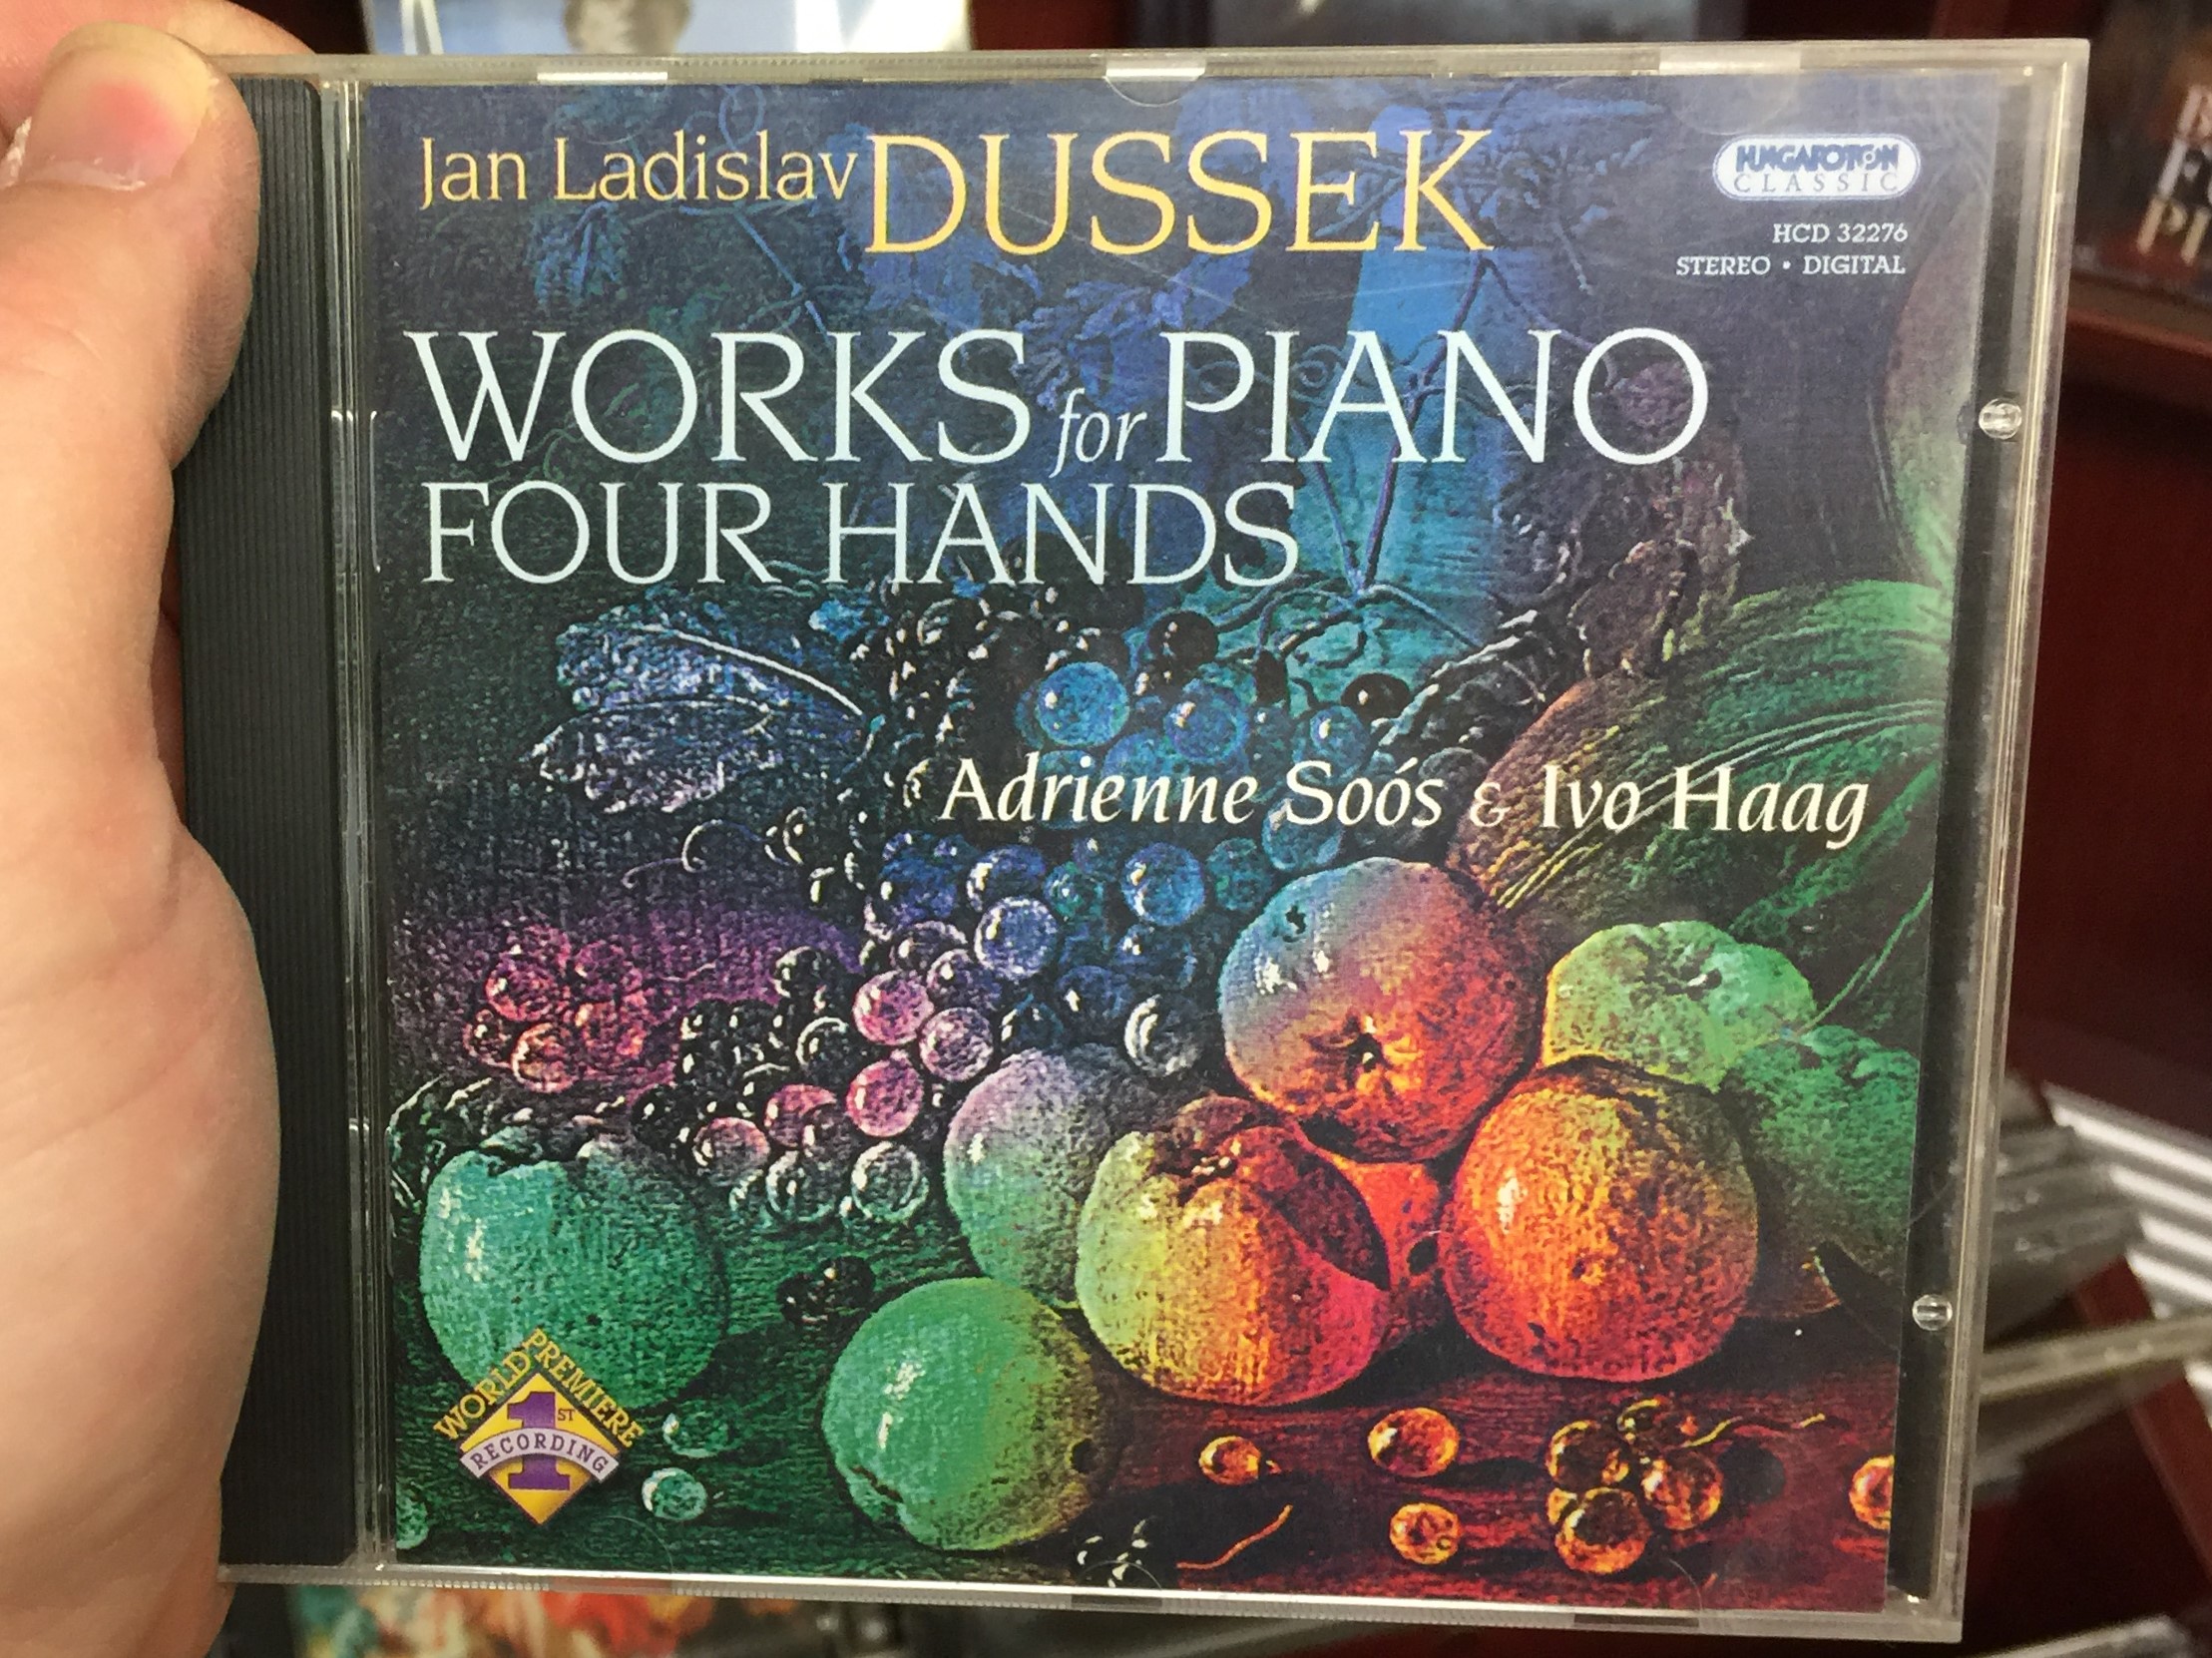 jan-ladislav-dussek-works-for-piano-four-hands-adrienne-soos-ivo-haag-hungaroton-classic-audio-cd-2004-stereo-hcd-32276-1-.jpg